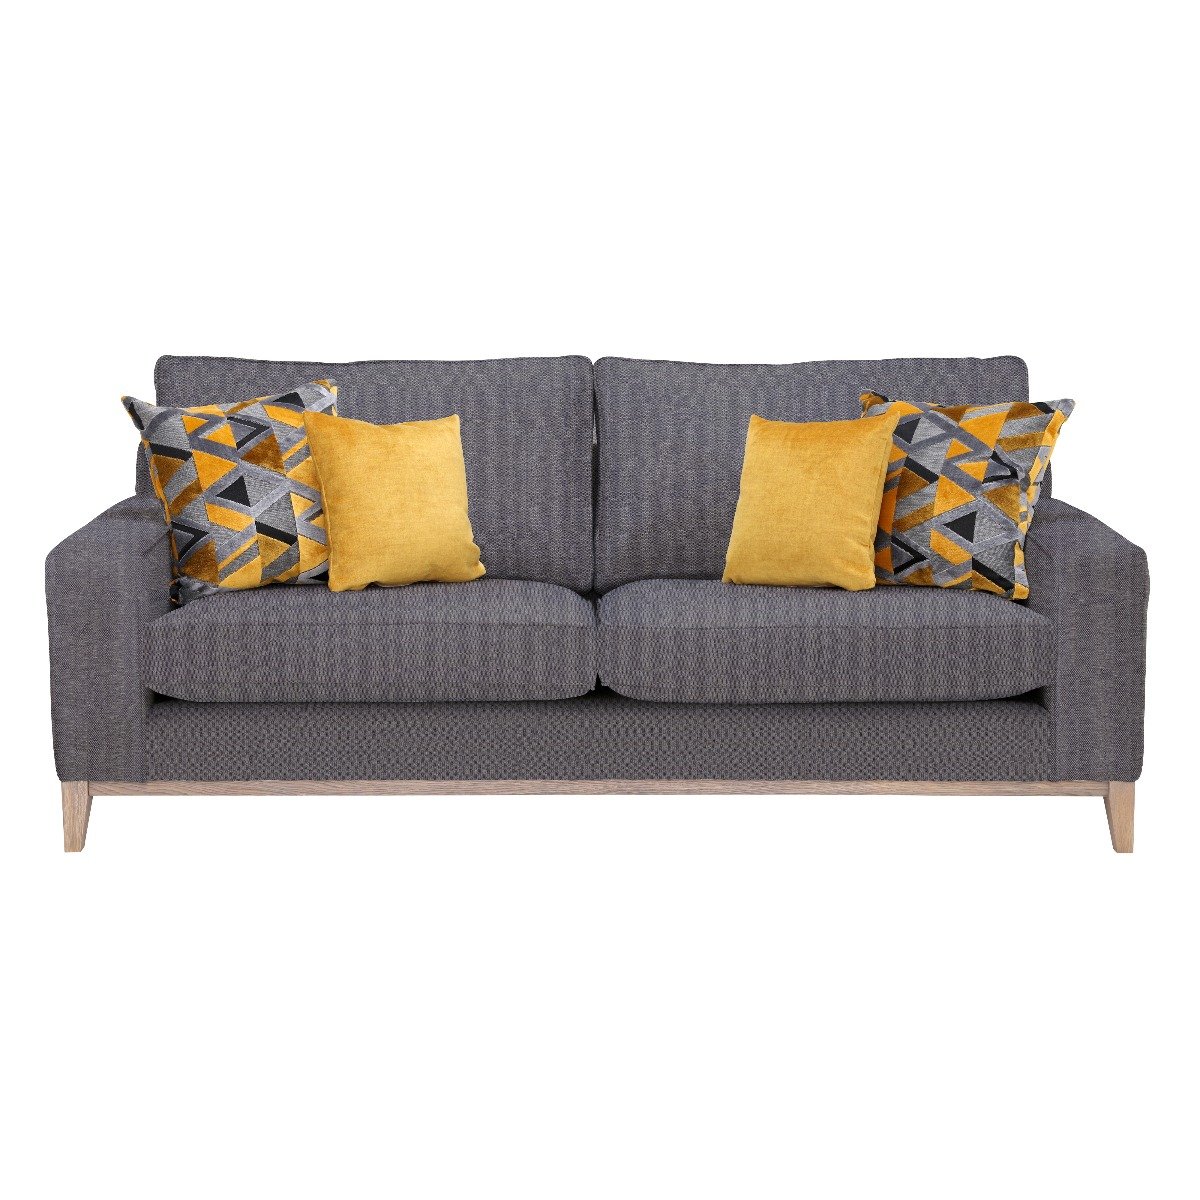 Ashton 3 Seater Sofa, Grey | Barker & Stonehouse